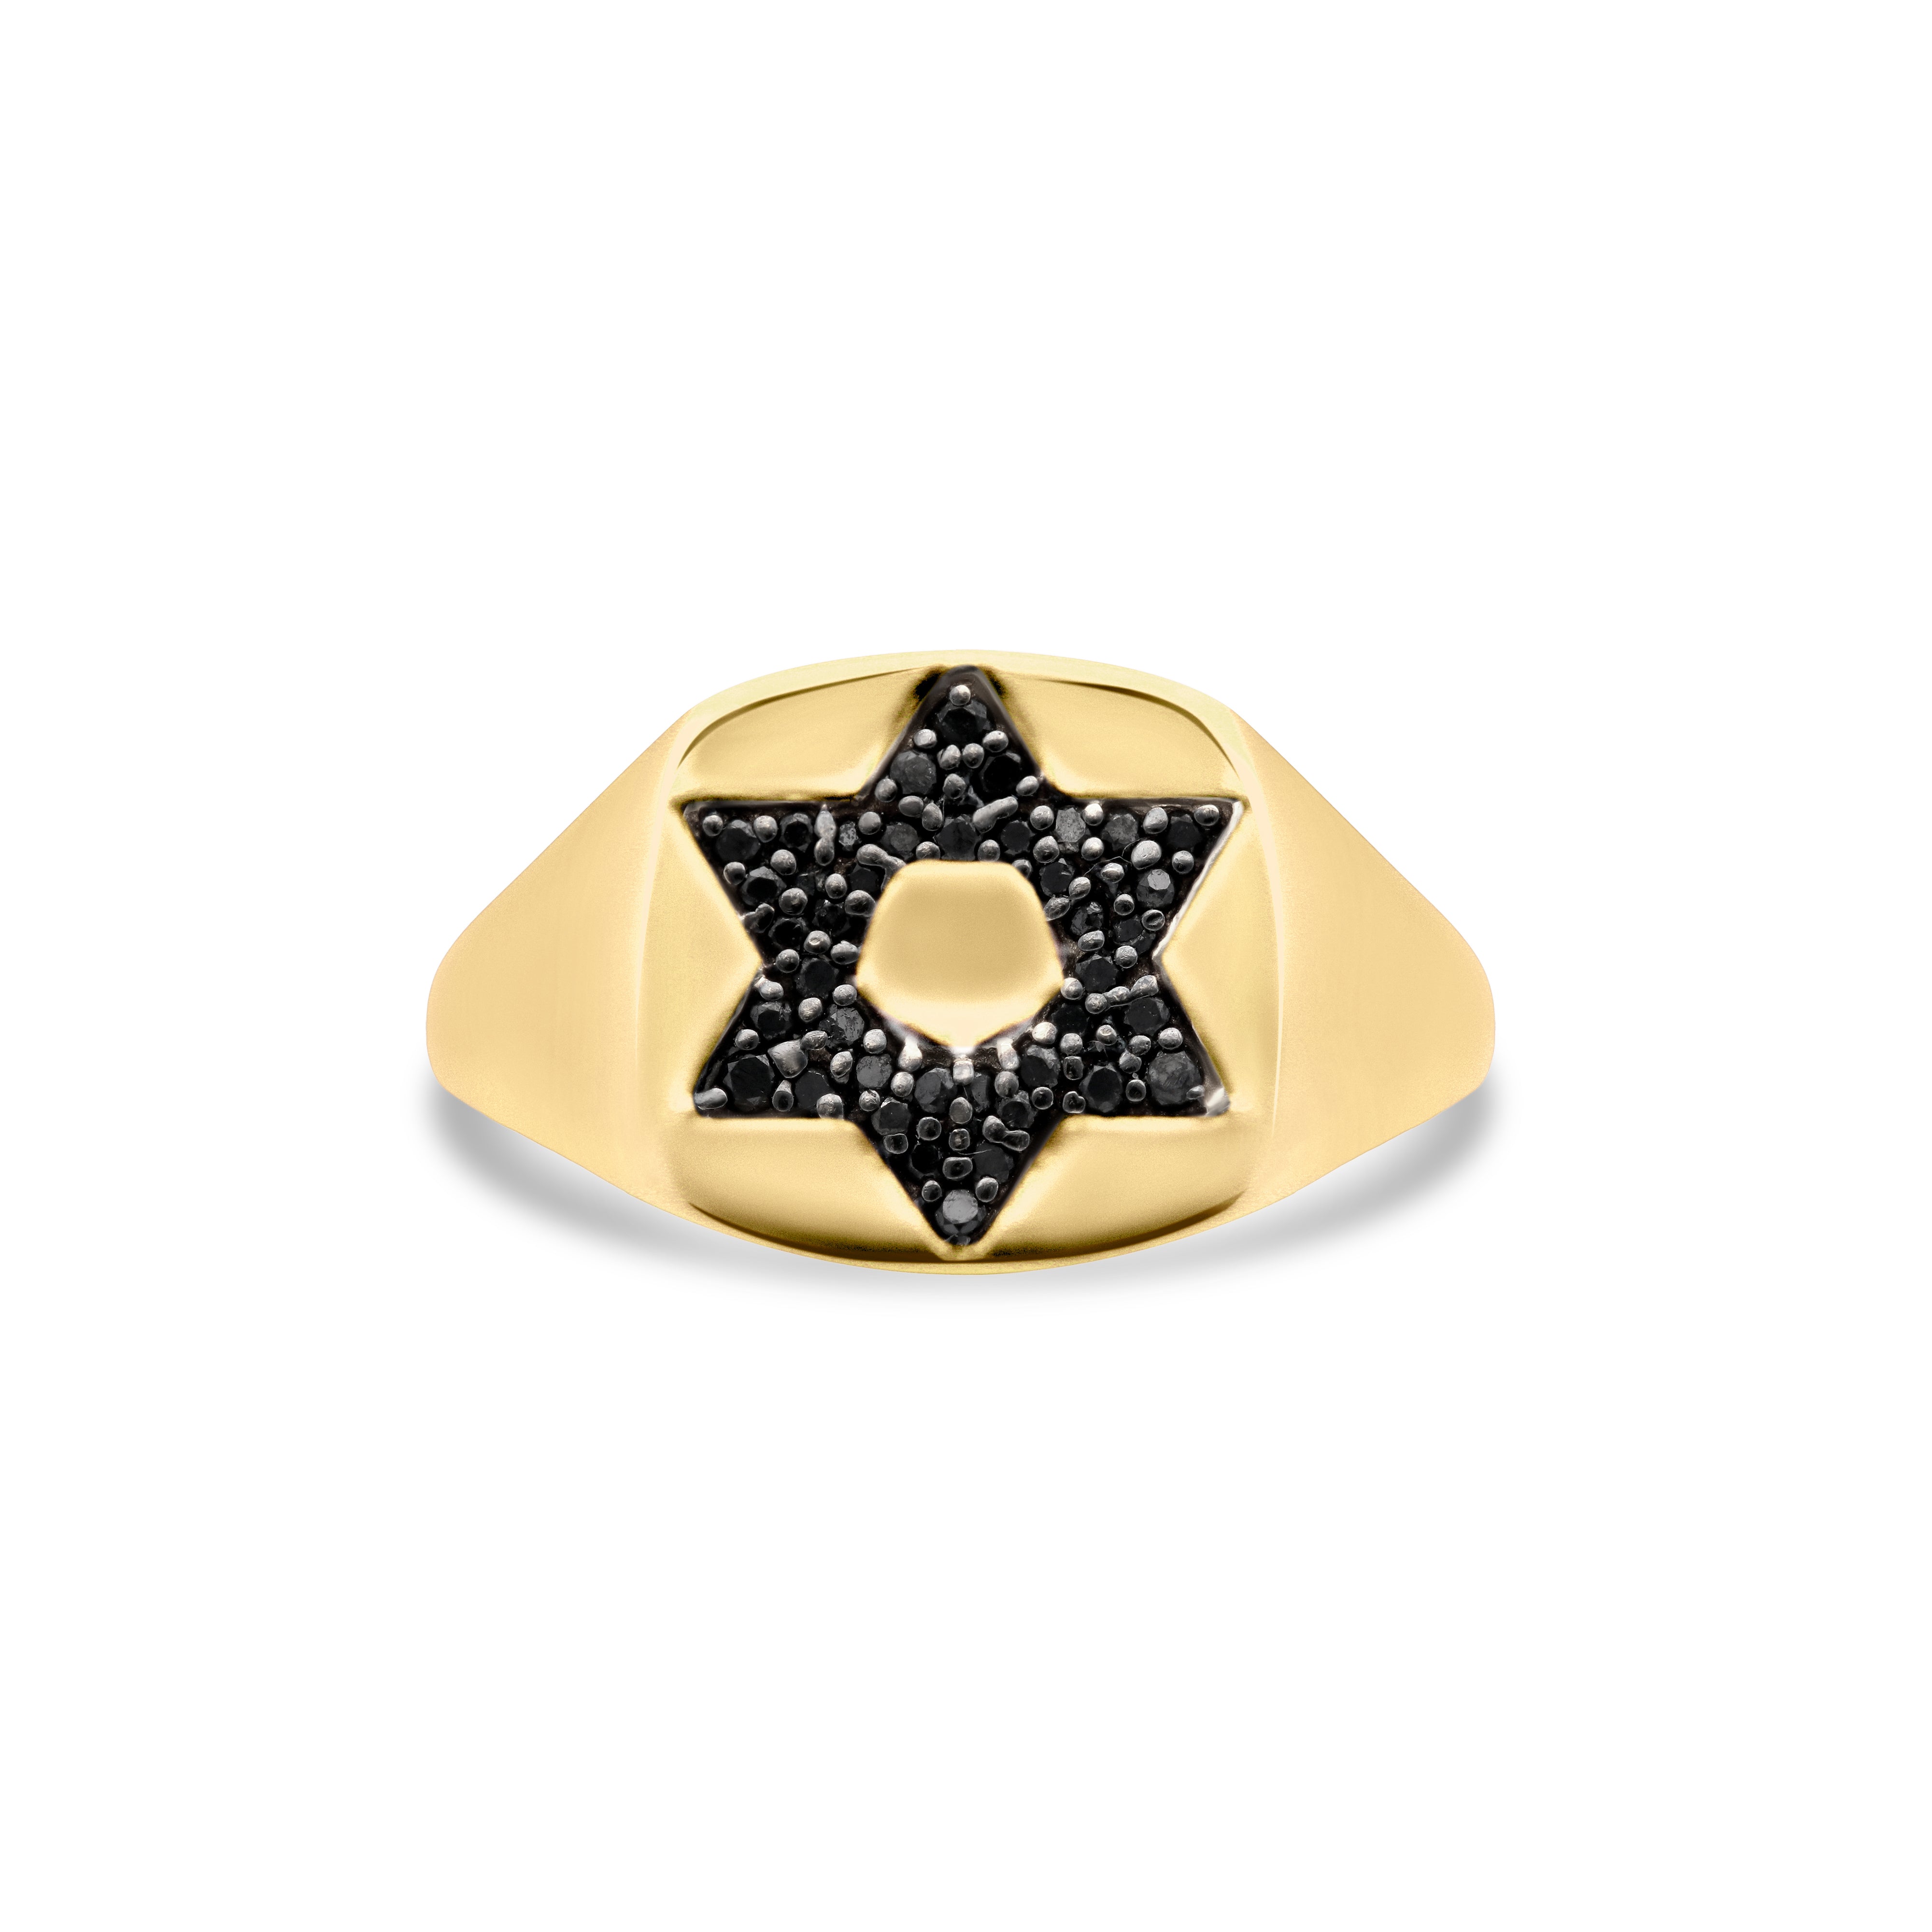 The Black Diamond Mazel Signet Pinky Ring